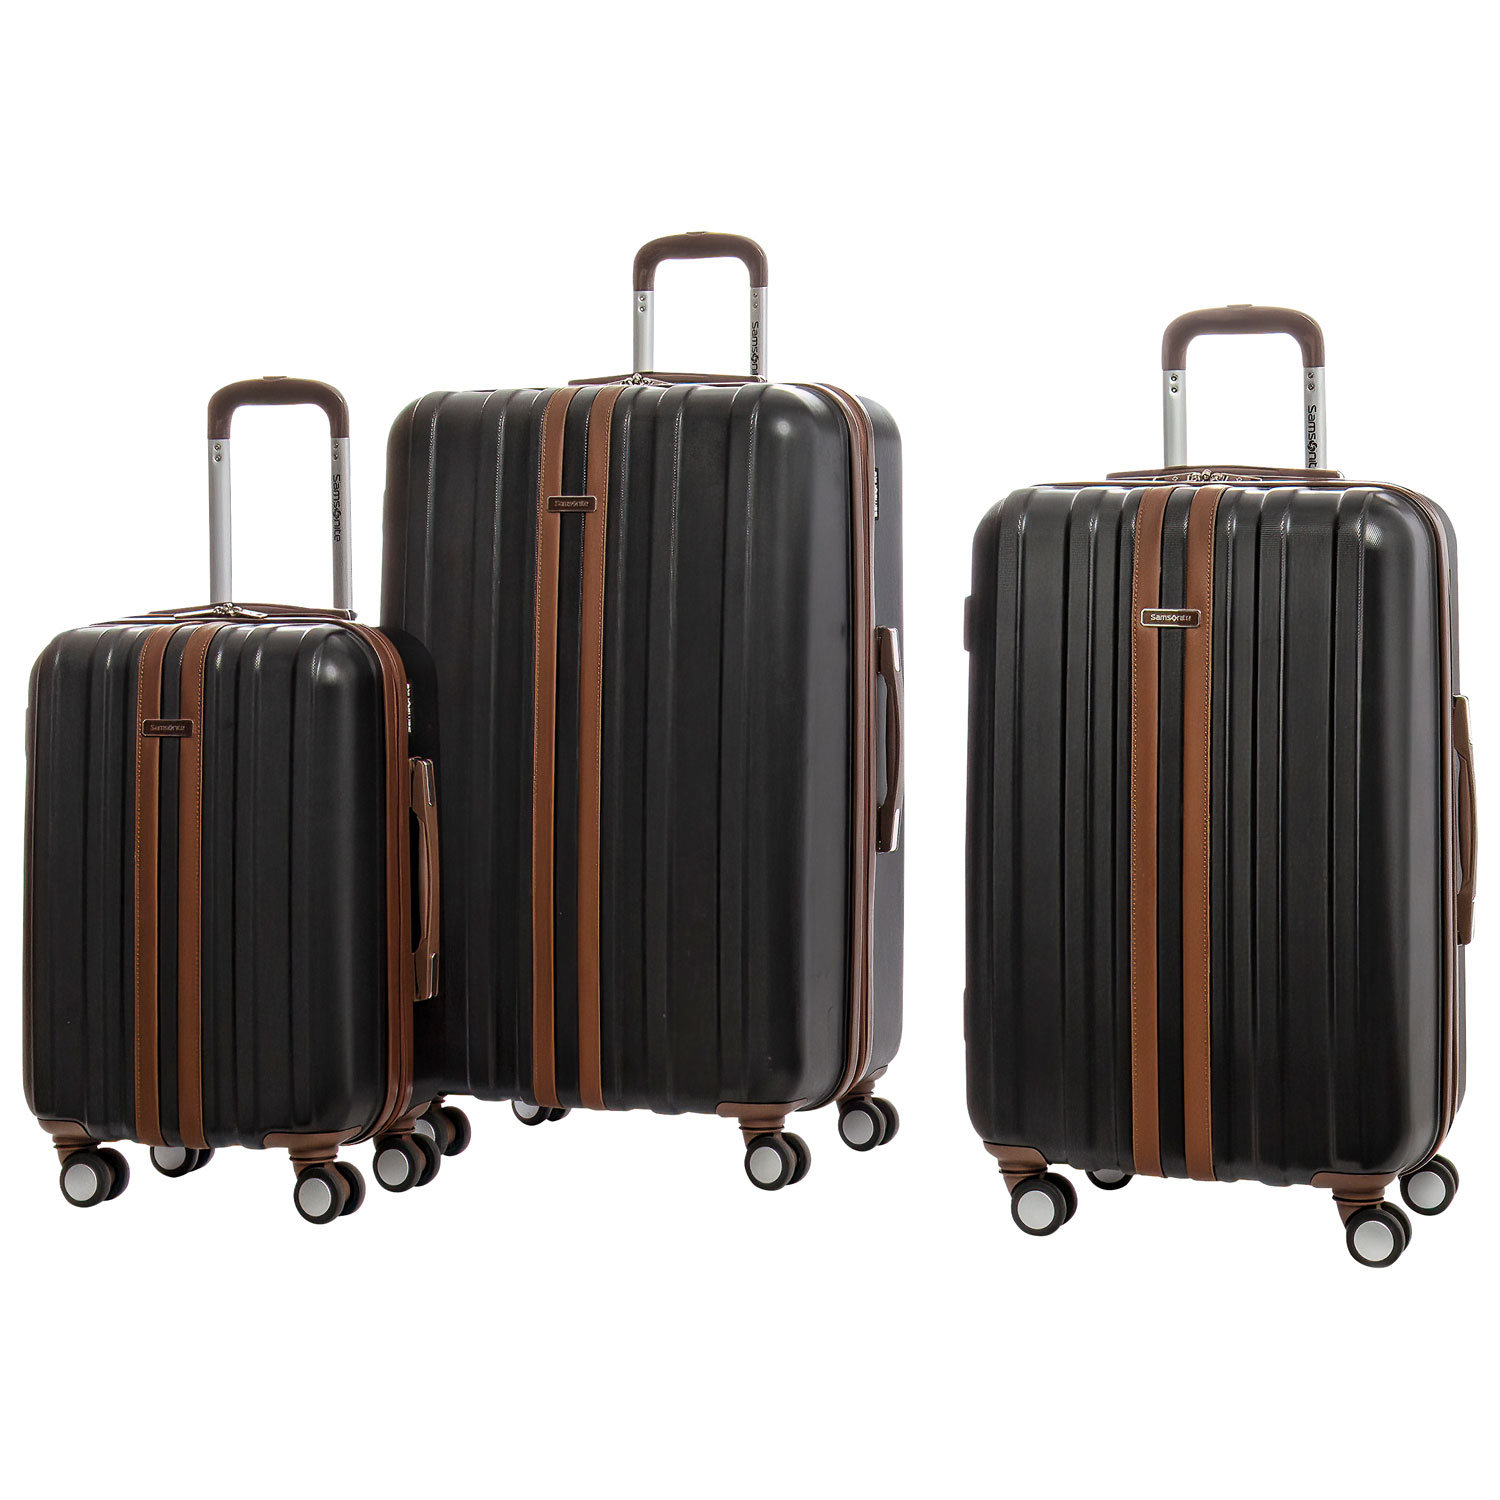 Samsonite Spectacular LTD 3-Piece Hard Side Expandable Luggage Set - Black/Brown